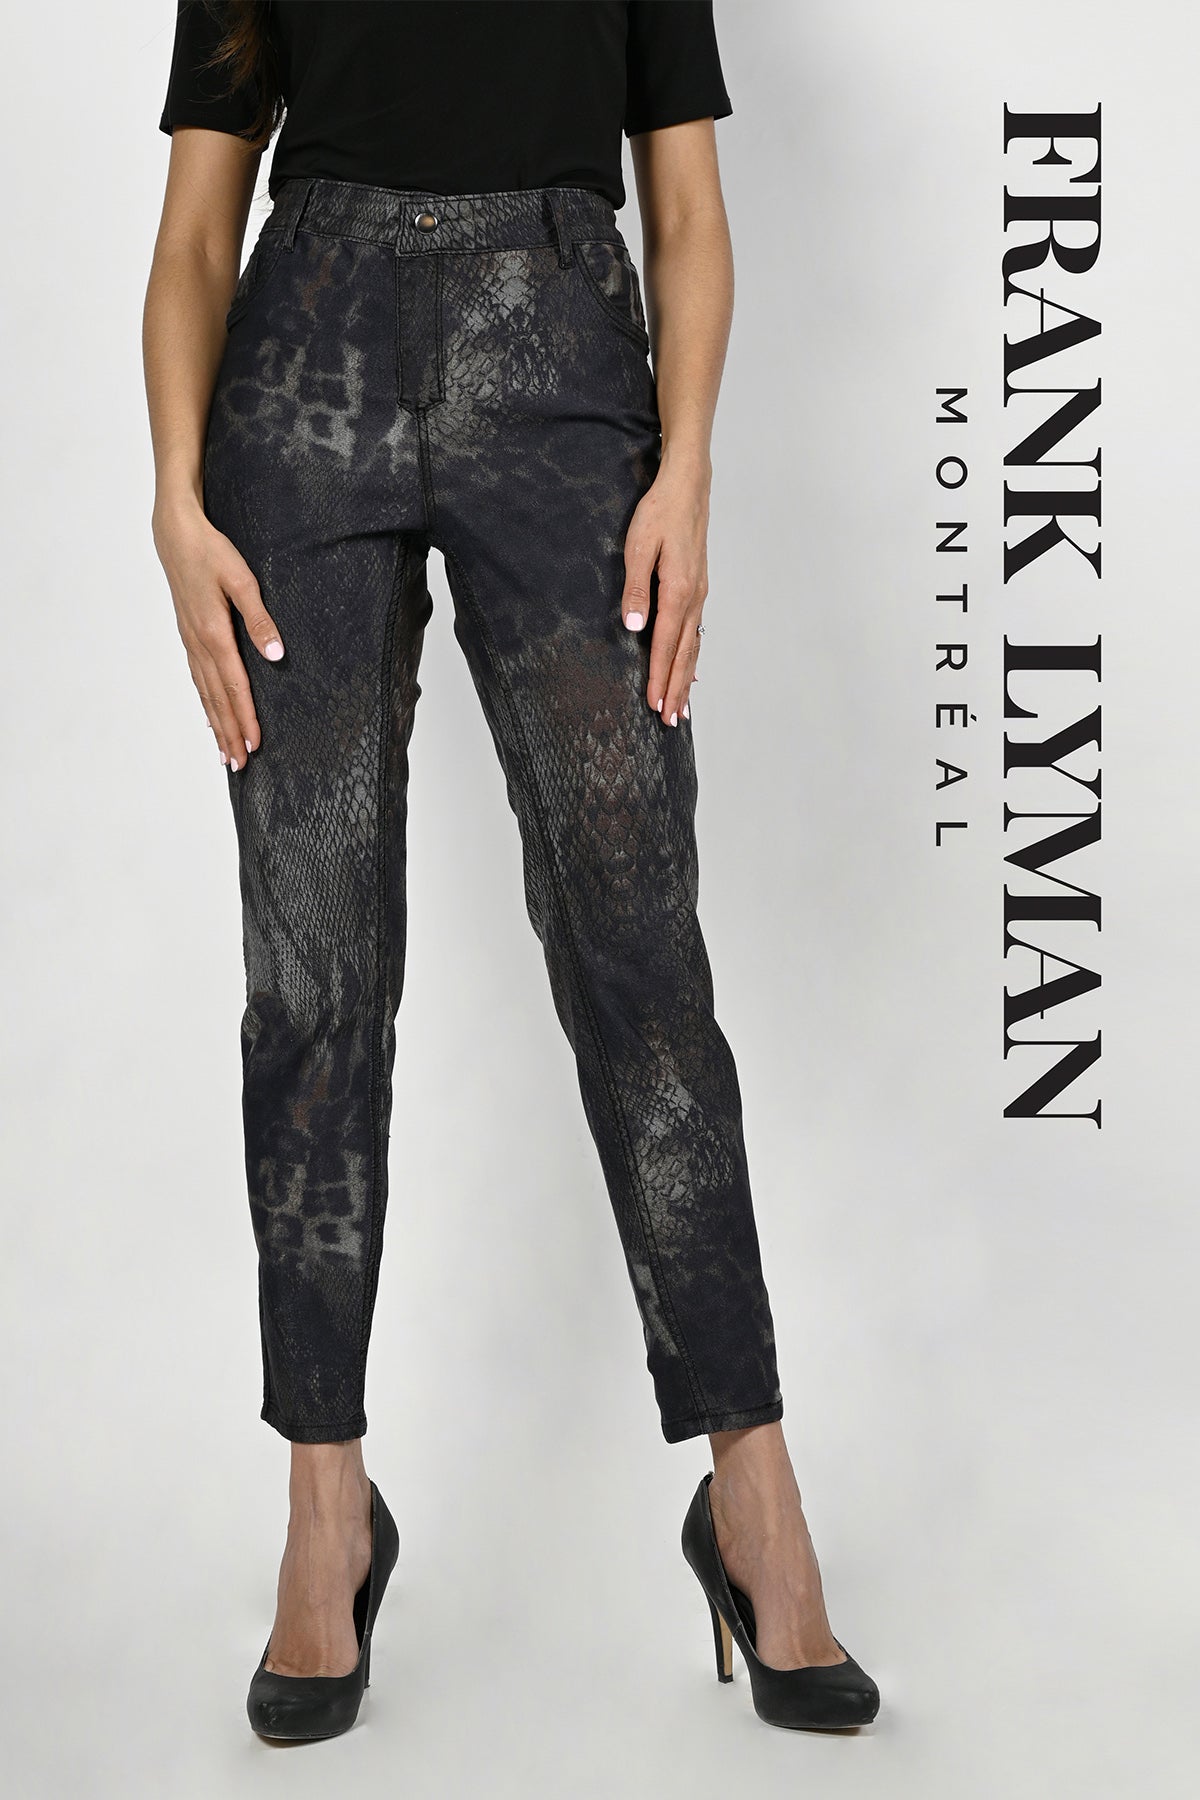 Frank Lyman Montreal Jeans-Buy Frank Lyman Montreal Jeans Online-Frank Lyman Montreal Reversible Jeans-Frank Lyman Montreal Online Shop